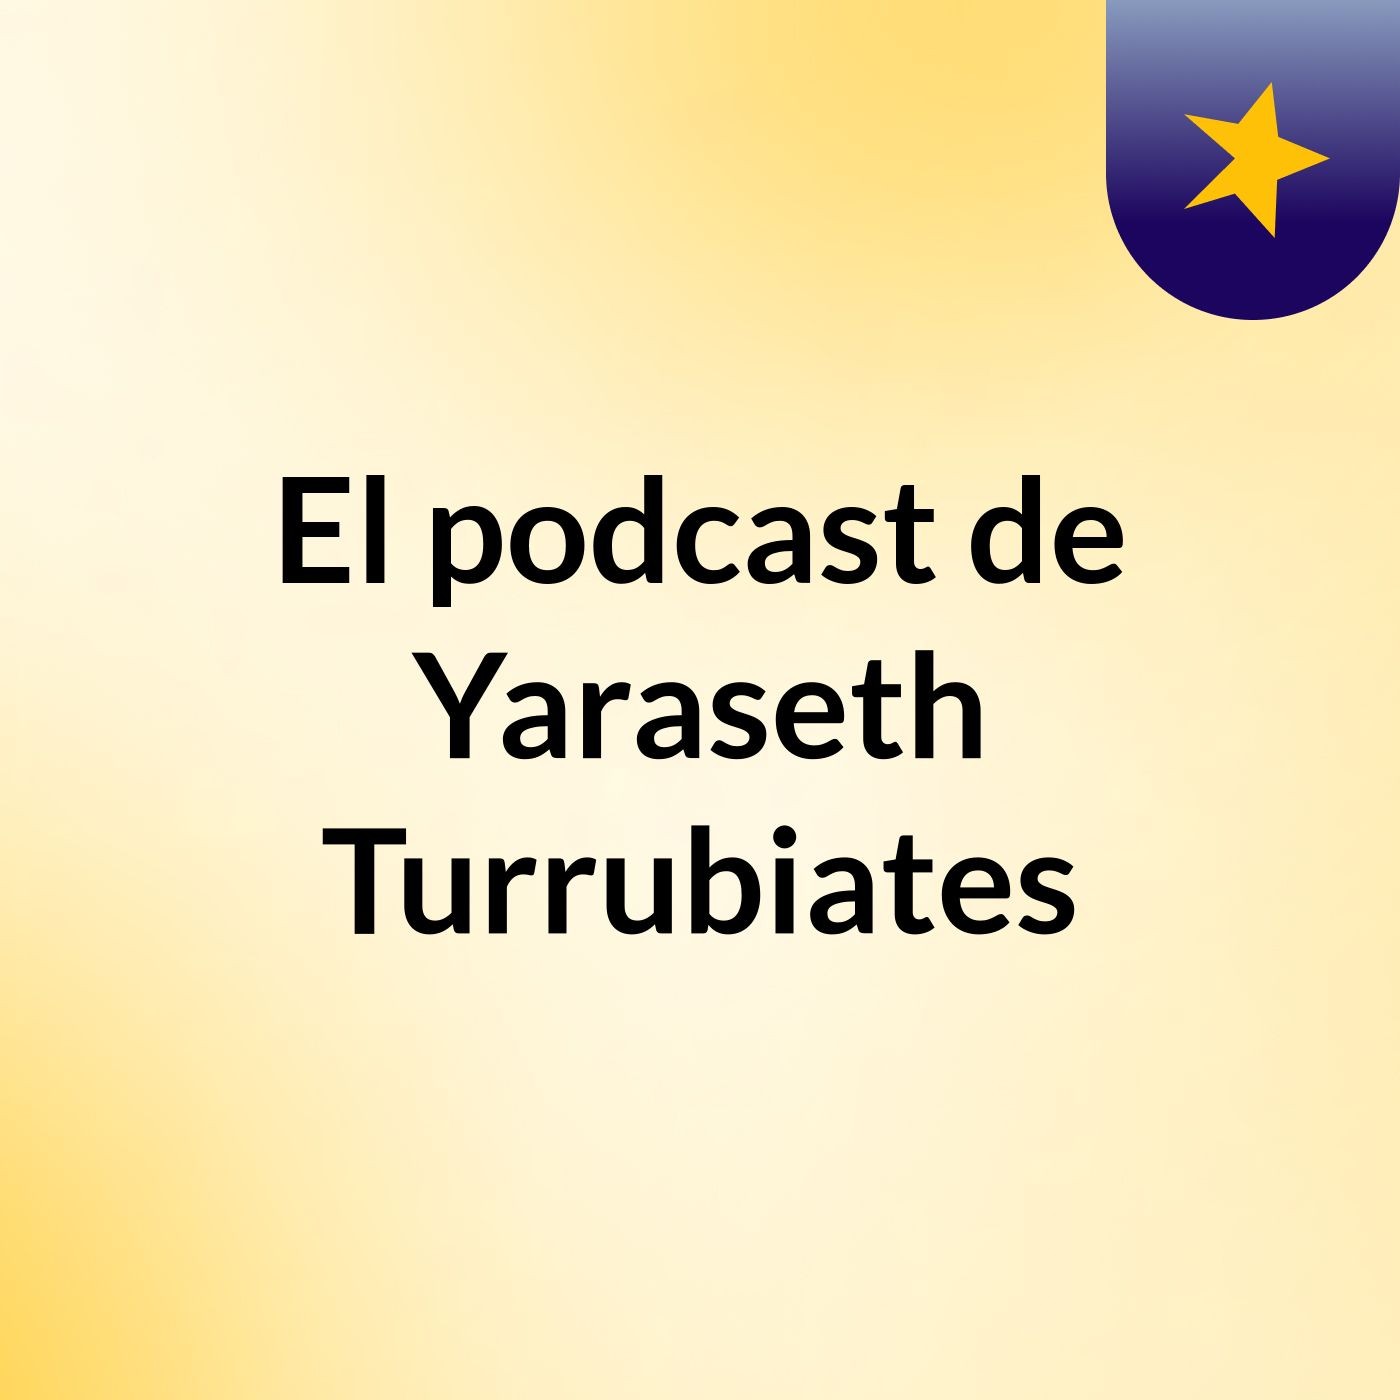 El podcast de Yaraseth Turrubiates